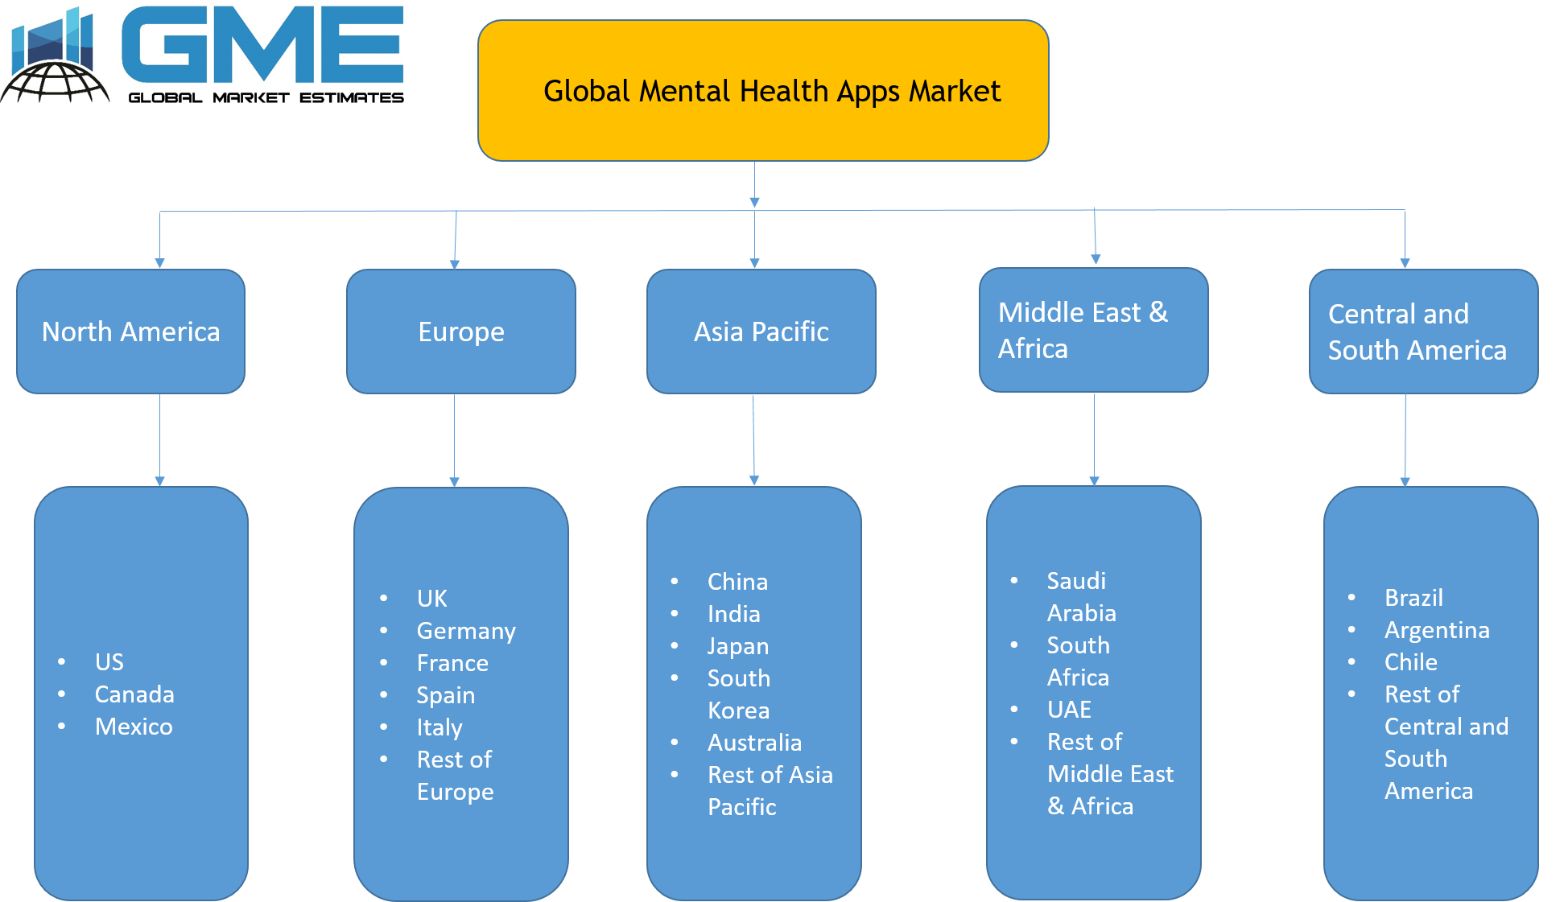 Global Mental Health Apps Market - Regional Analysis